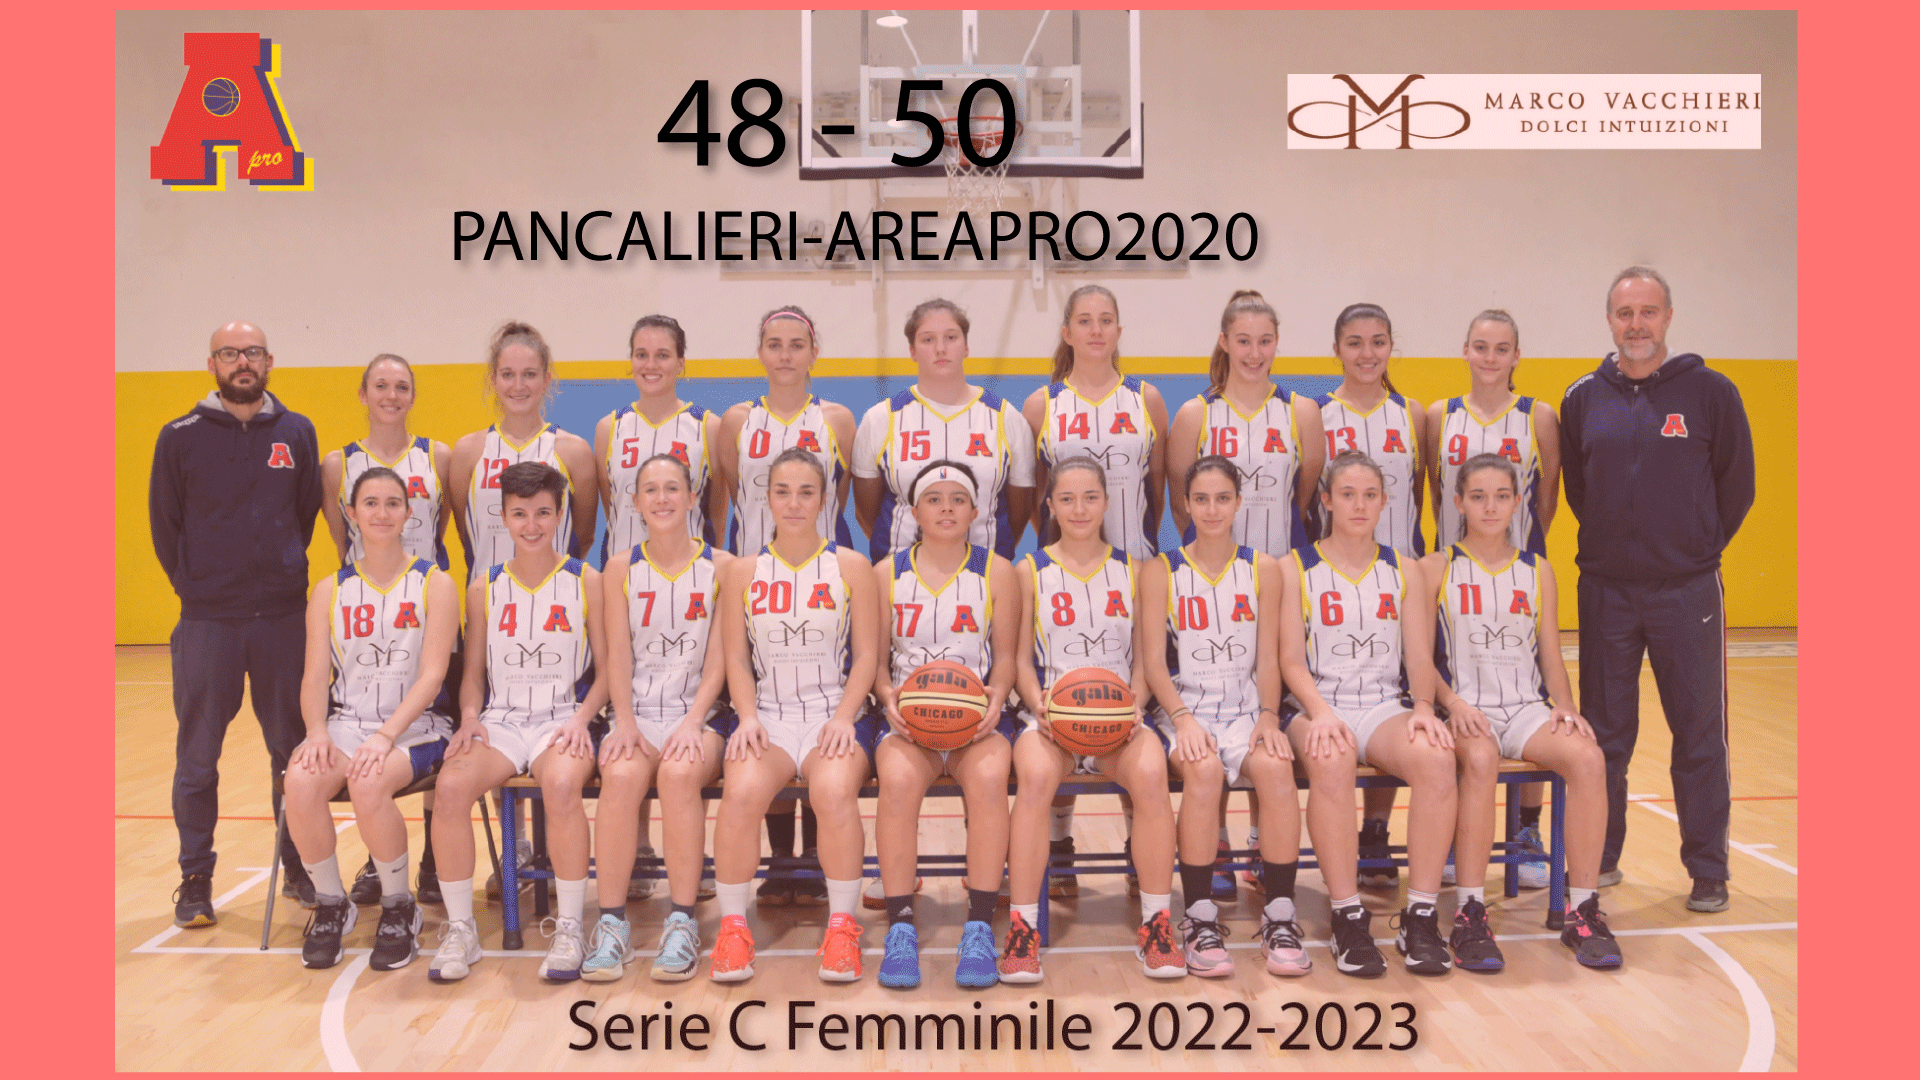 Serie  C Femminile: AreaPro2020 vince con Pancalieri prima in classifica.